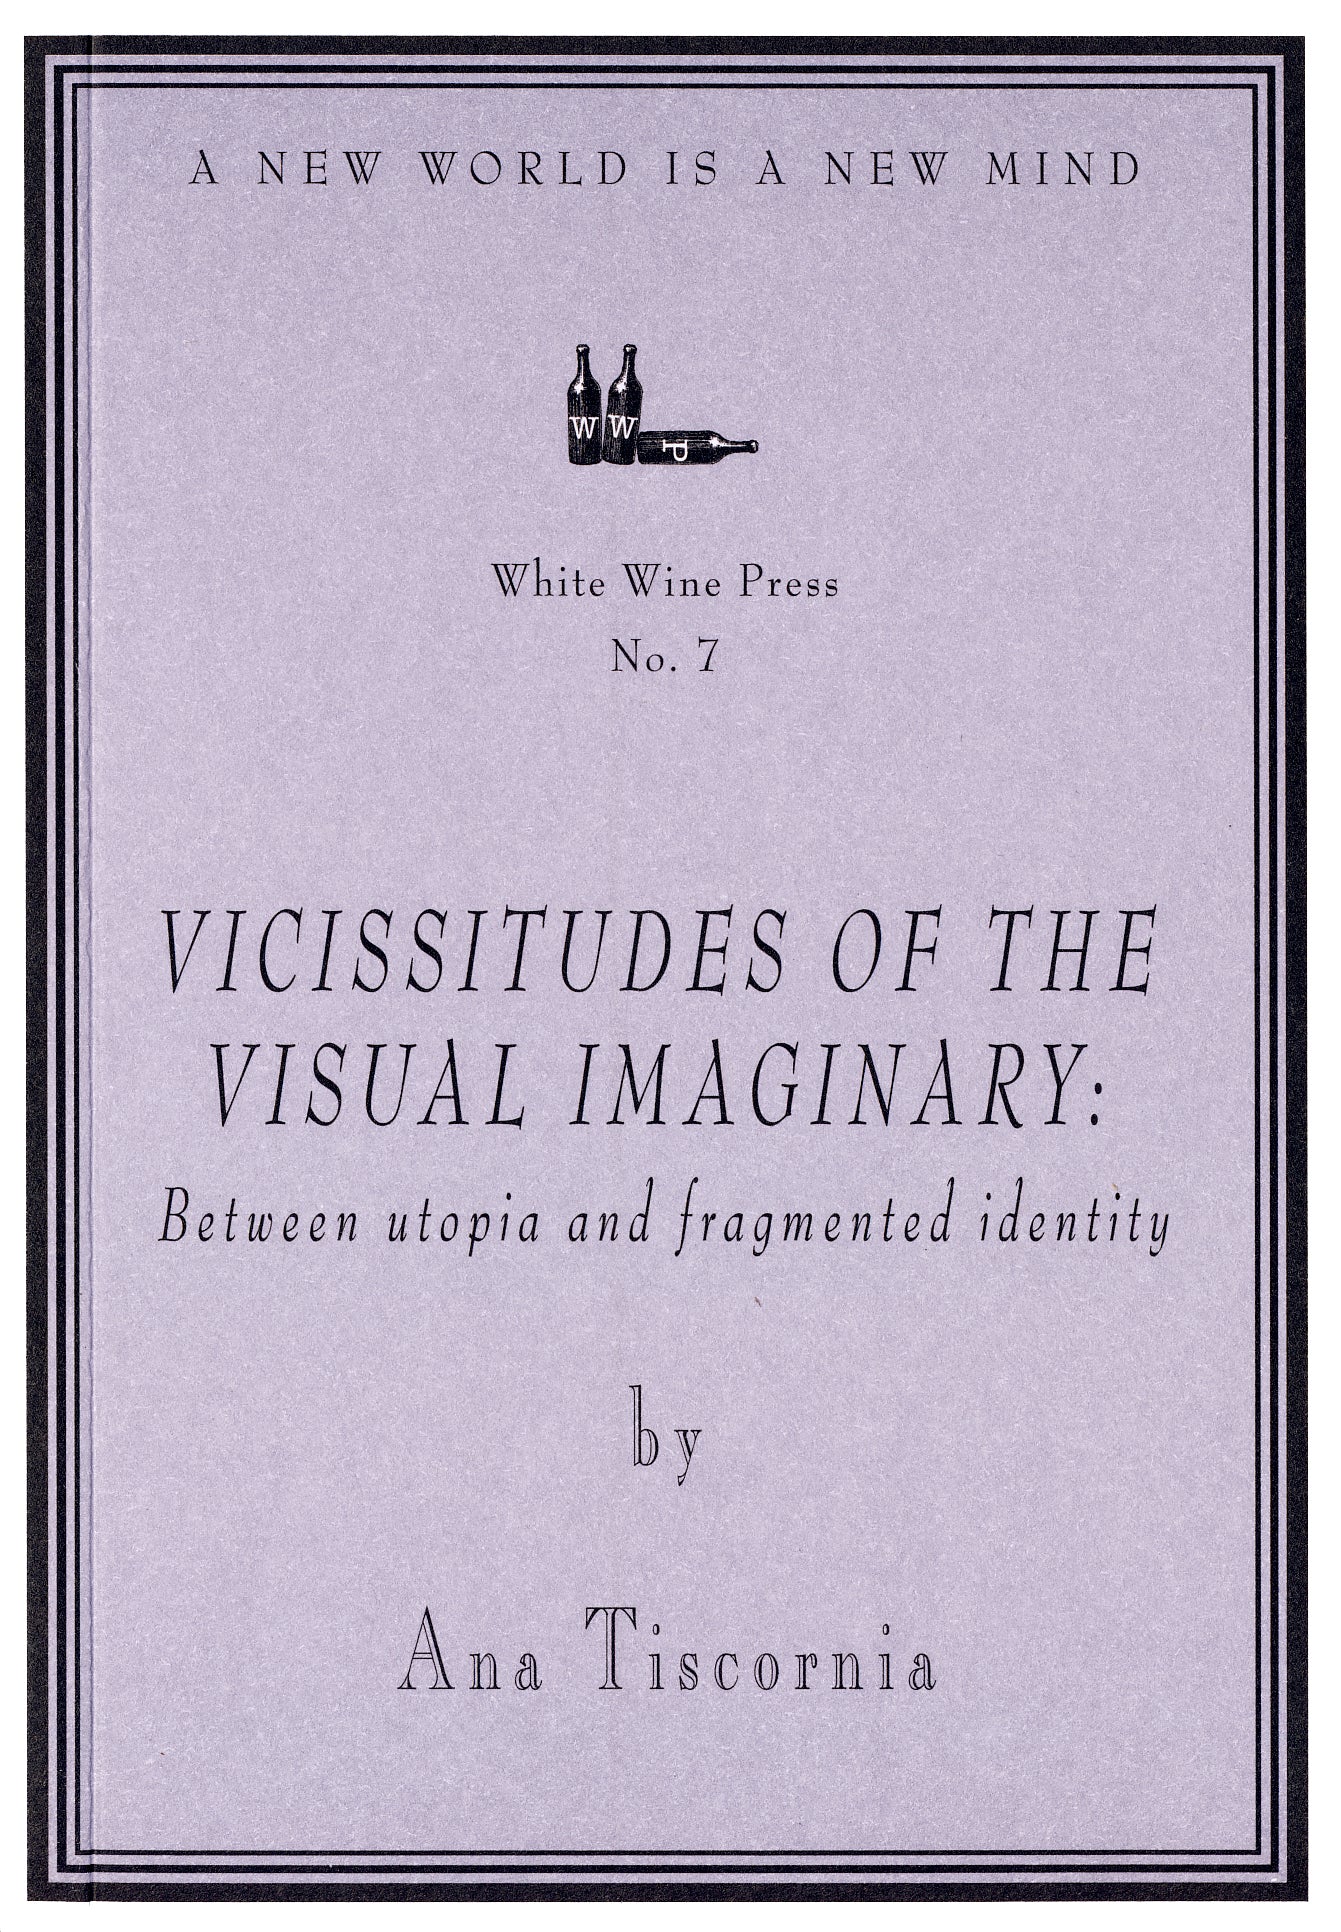 Vicissitudes of the Visual Imaginary by Ana Tiscornia [White Wine Press No. 7]